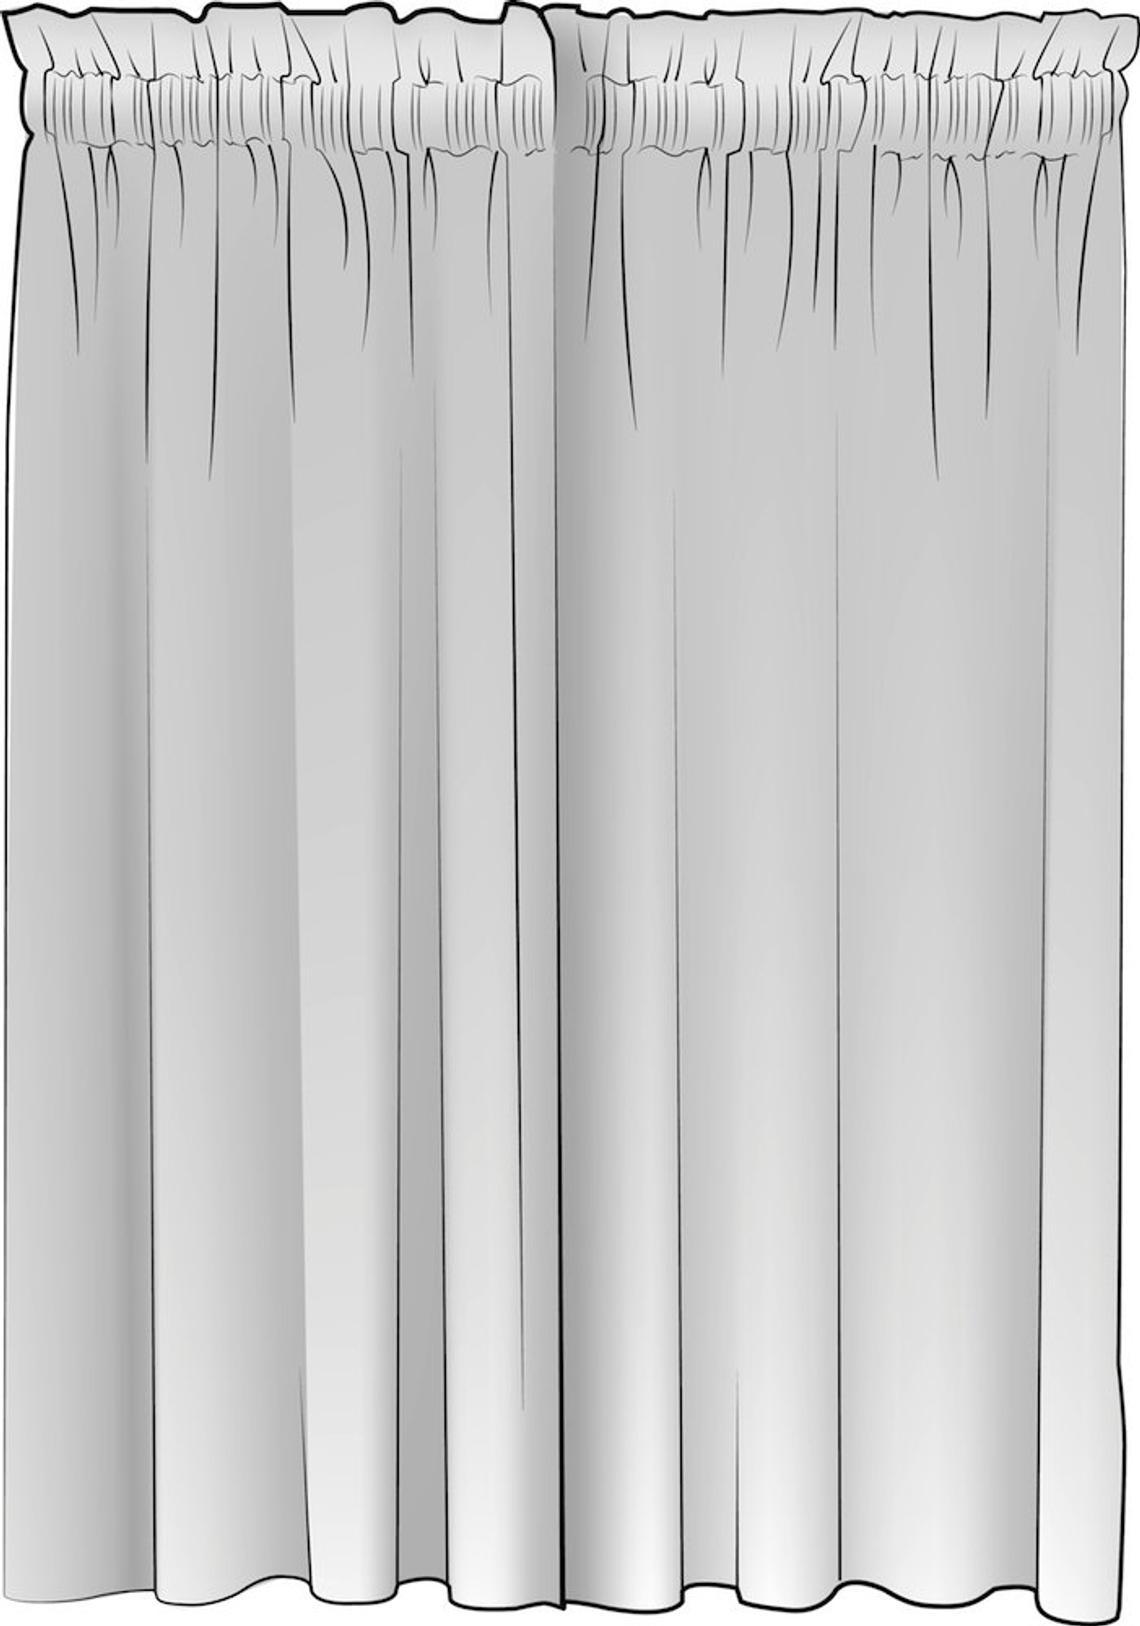 rod pocket curtain panels pair in tibi spa green geometric paisley